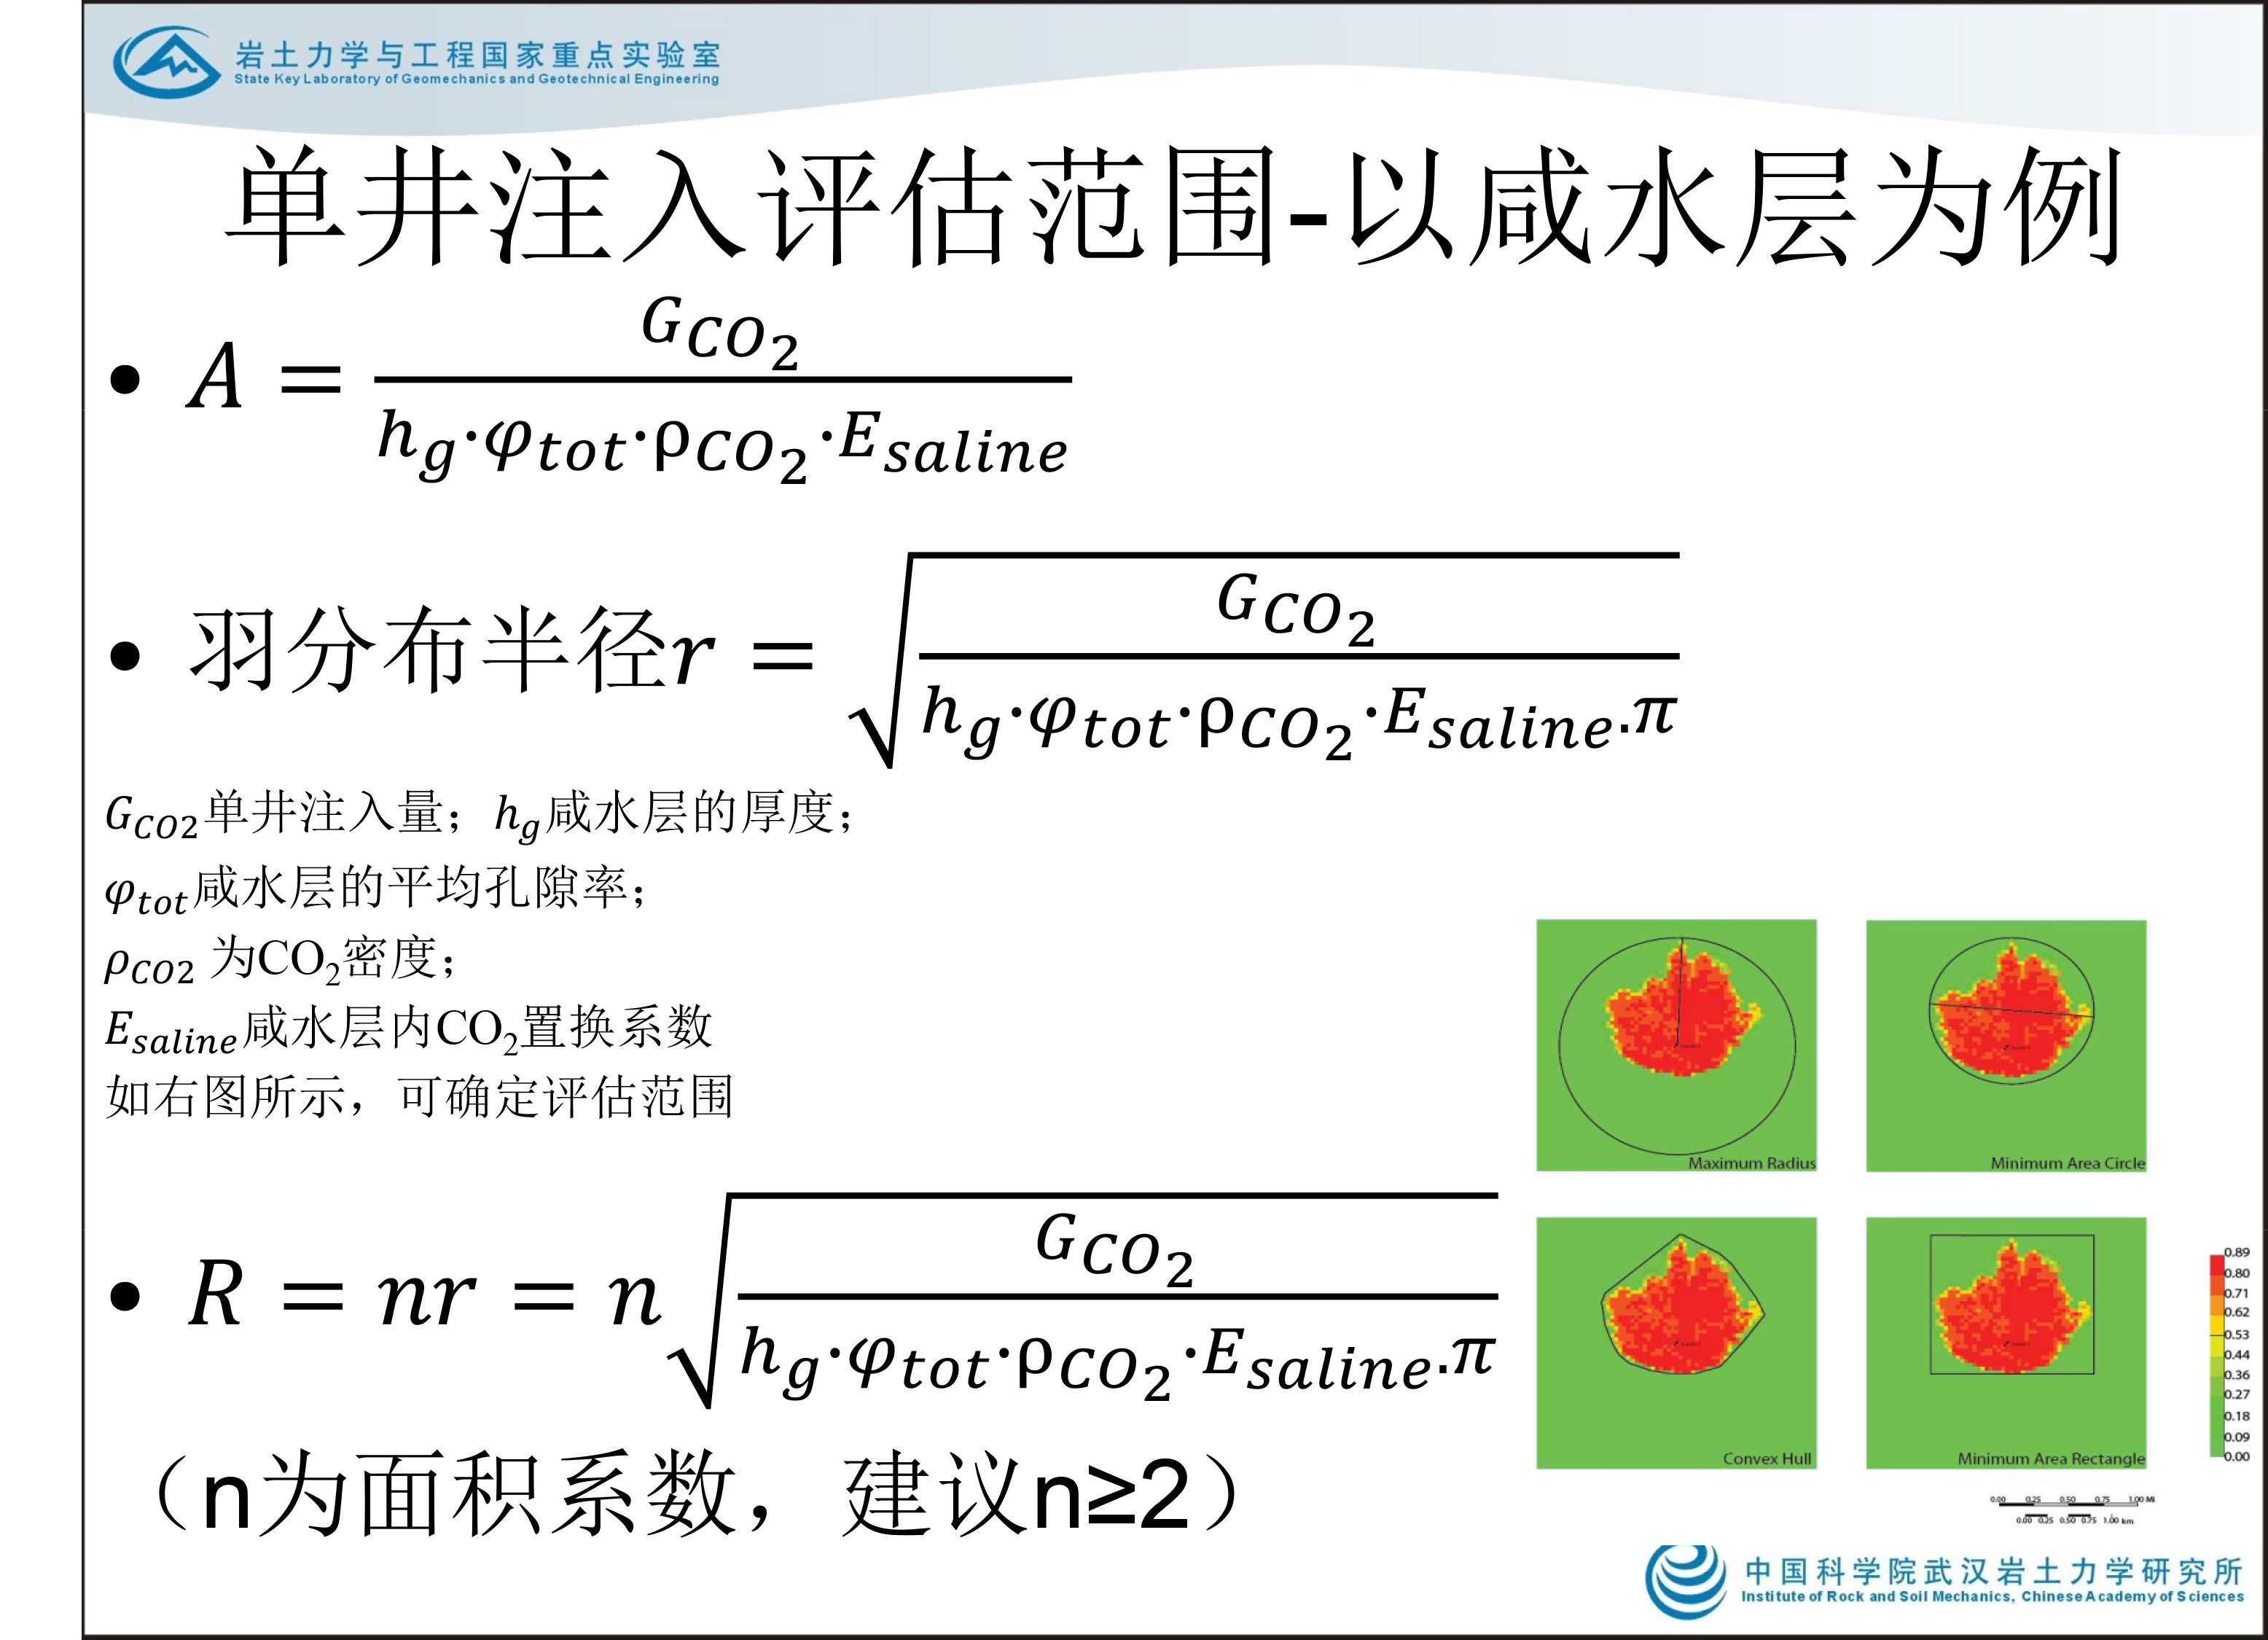 中国CCUS环境风险评估关键问题